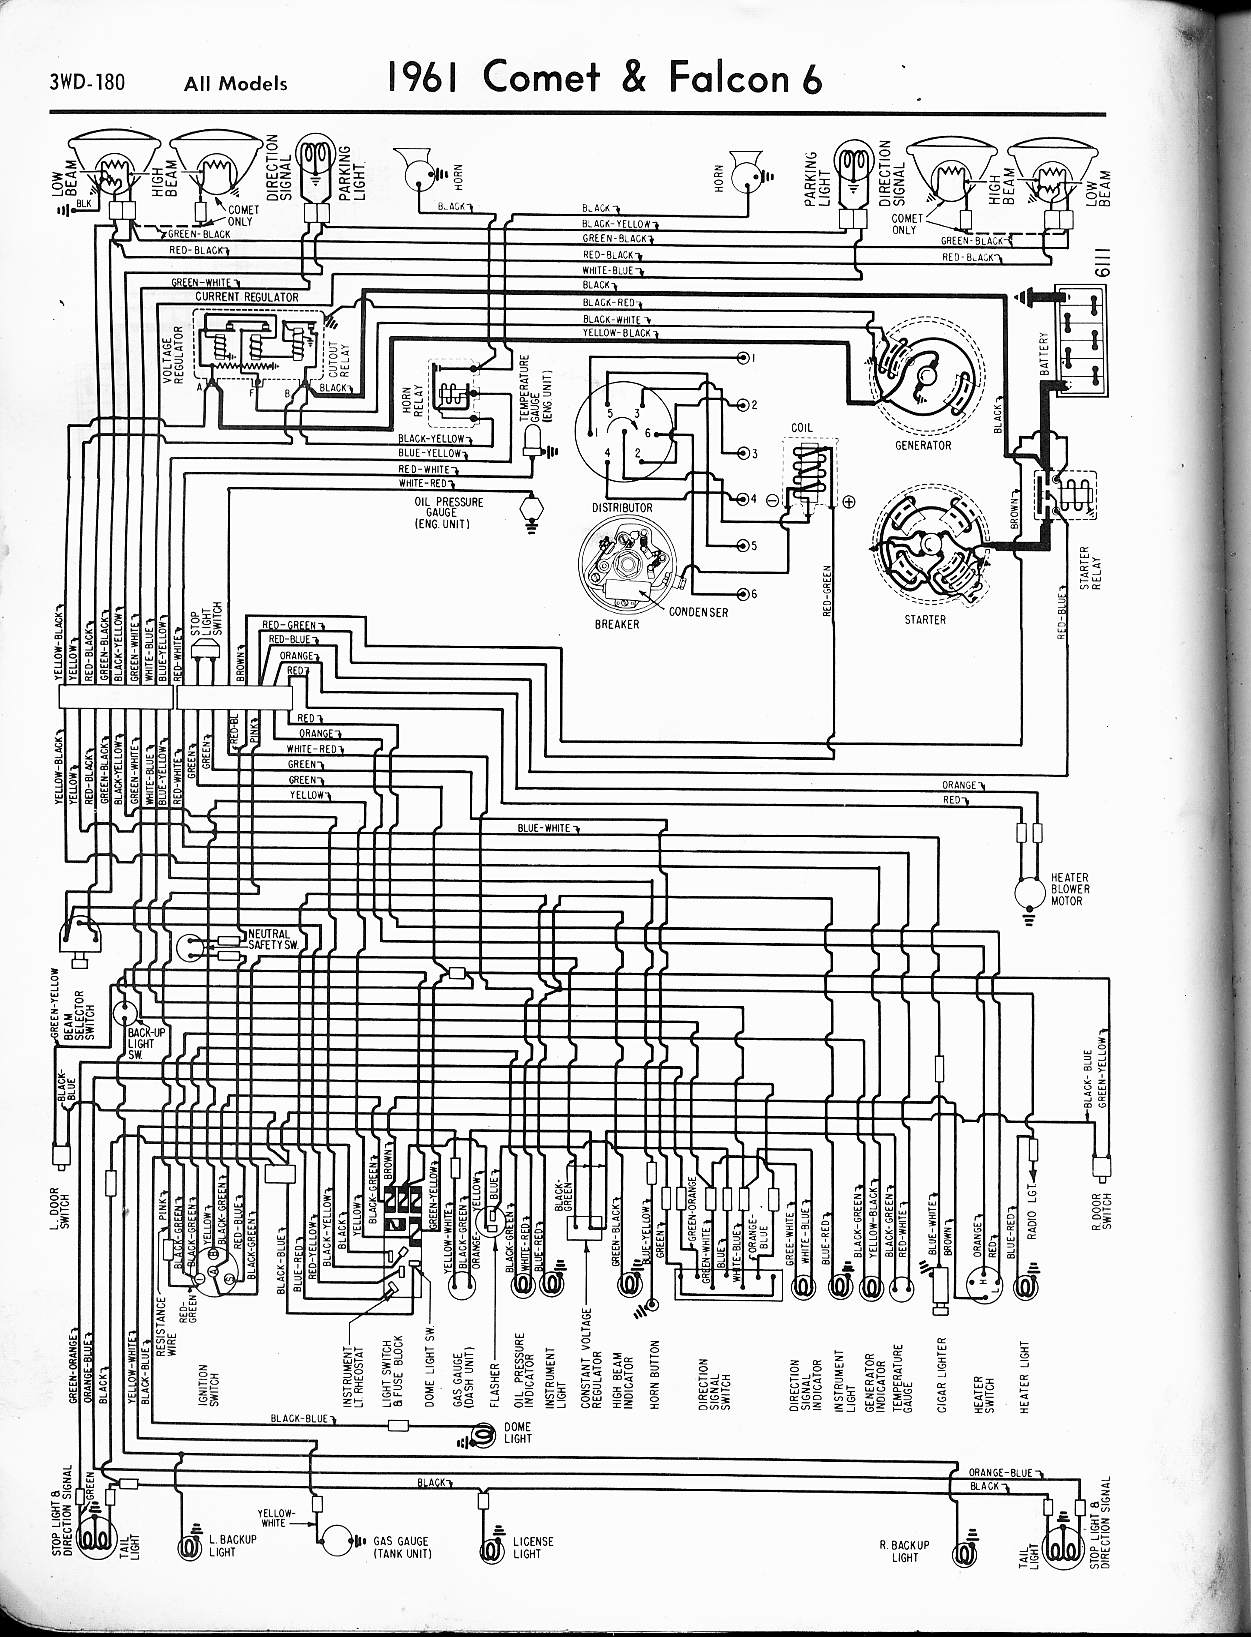 57 65 Ford Wiring Diagrams, El Falcon Stereo Wiring Diagram Pdf